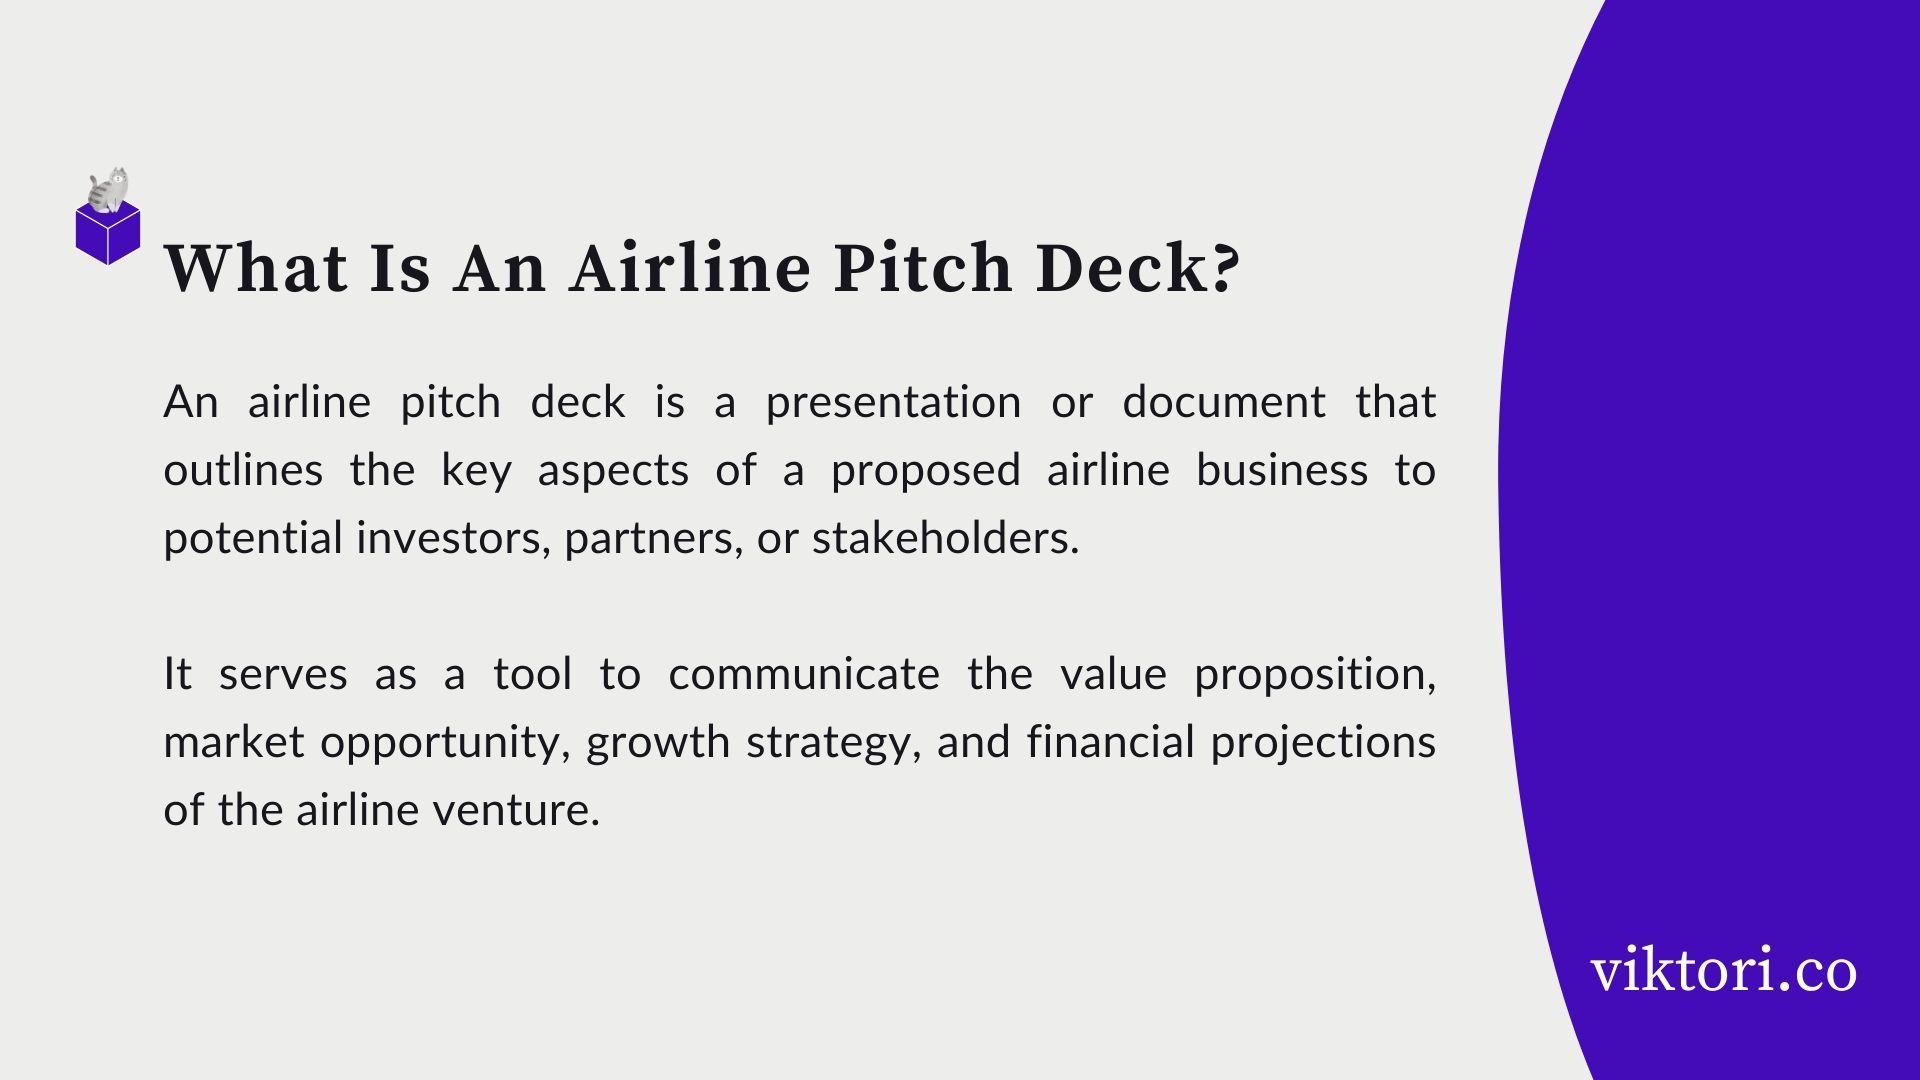 airline pitch deck definition